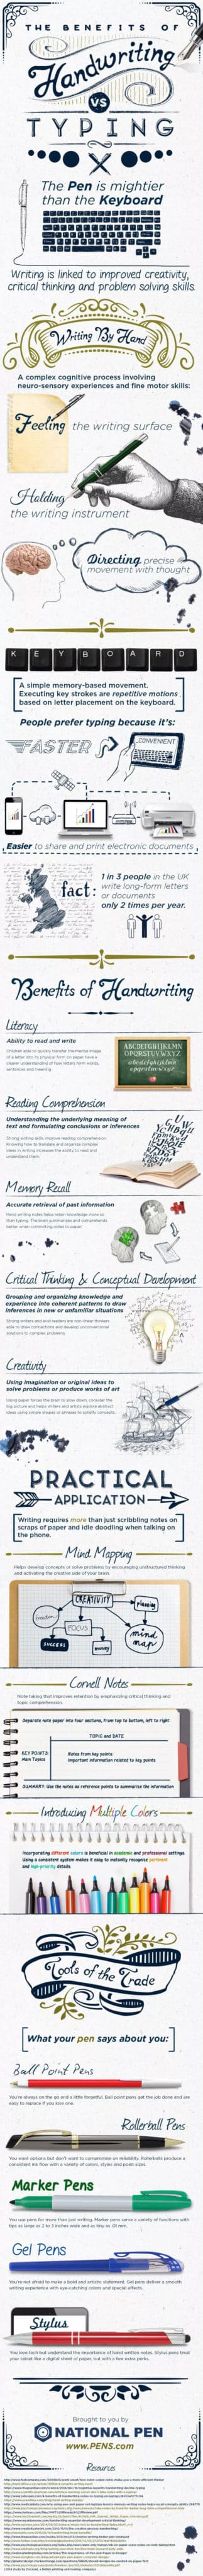 The-benefits-of-handwriting-full-infographic